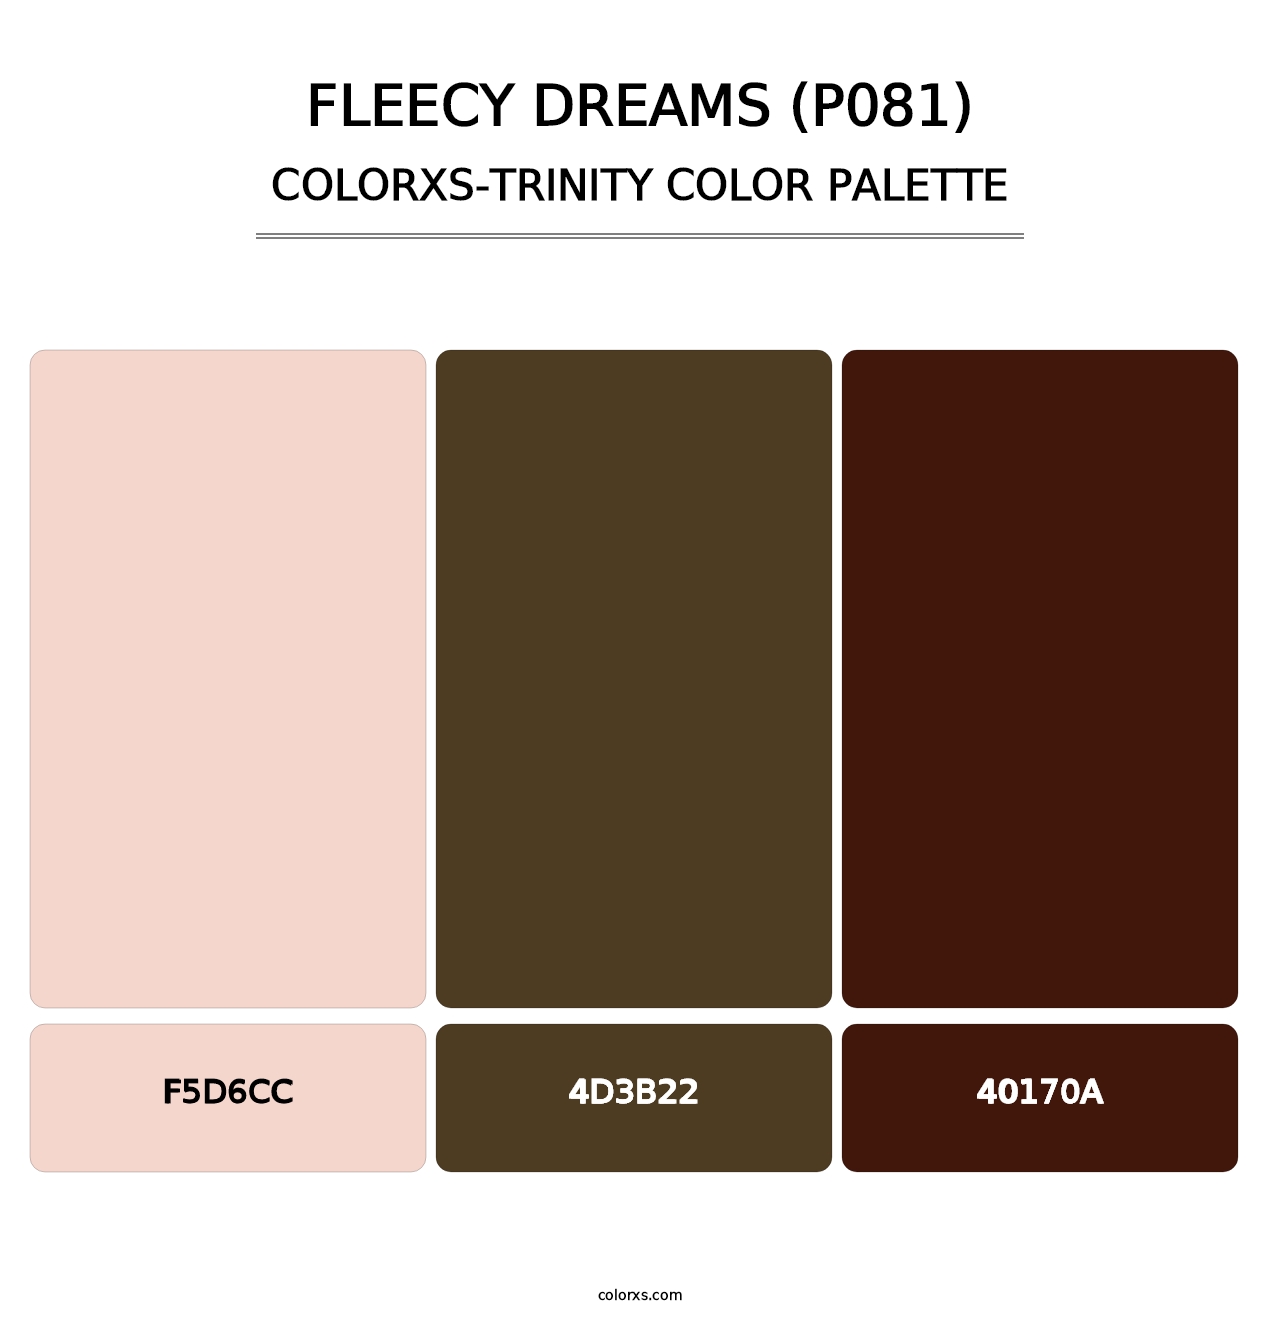 Fleecy Dreams (P081) - Colorxs Trinity Palette